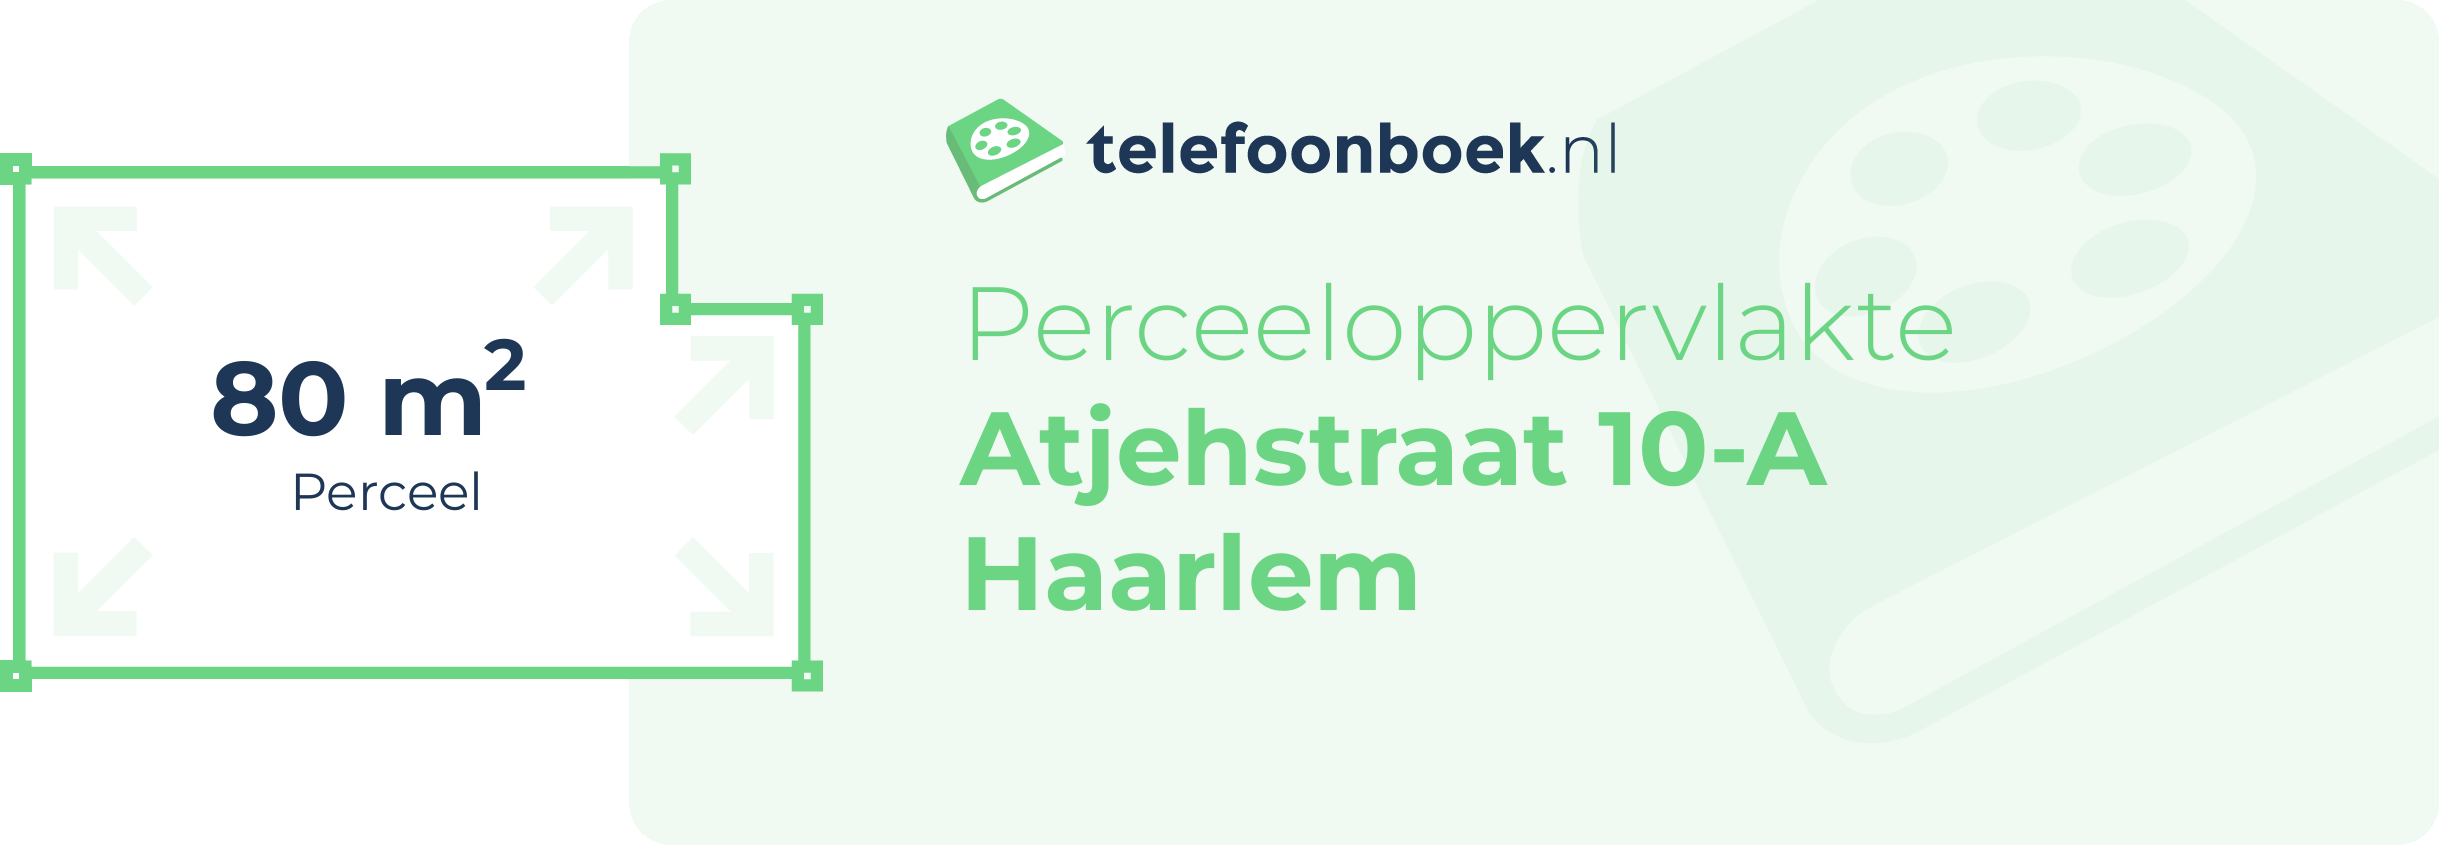 Perceeloppervlakte Atjehstraat 10-A Haarlem